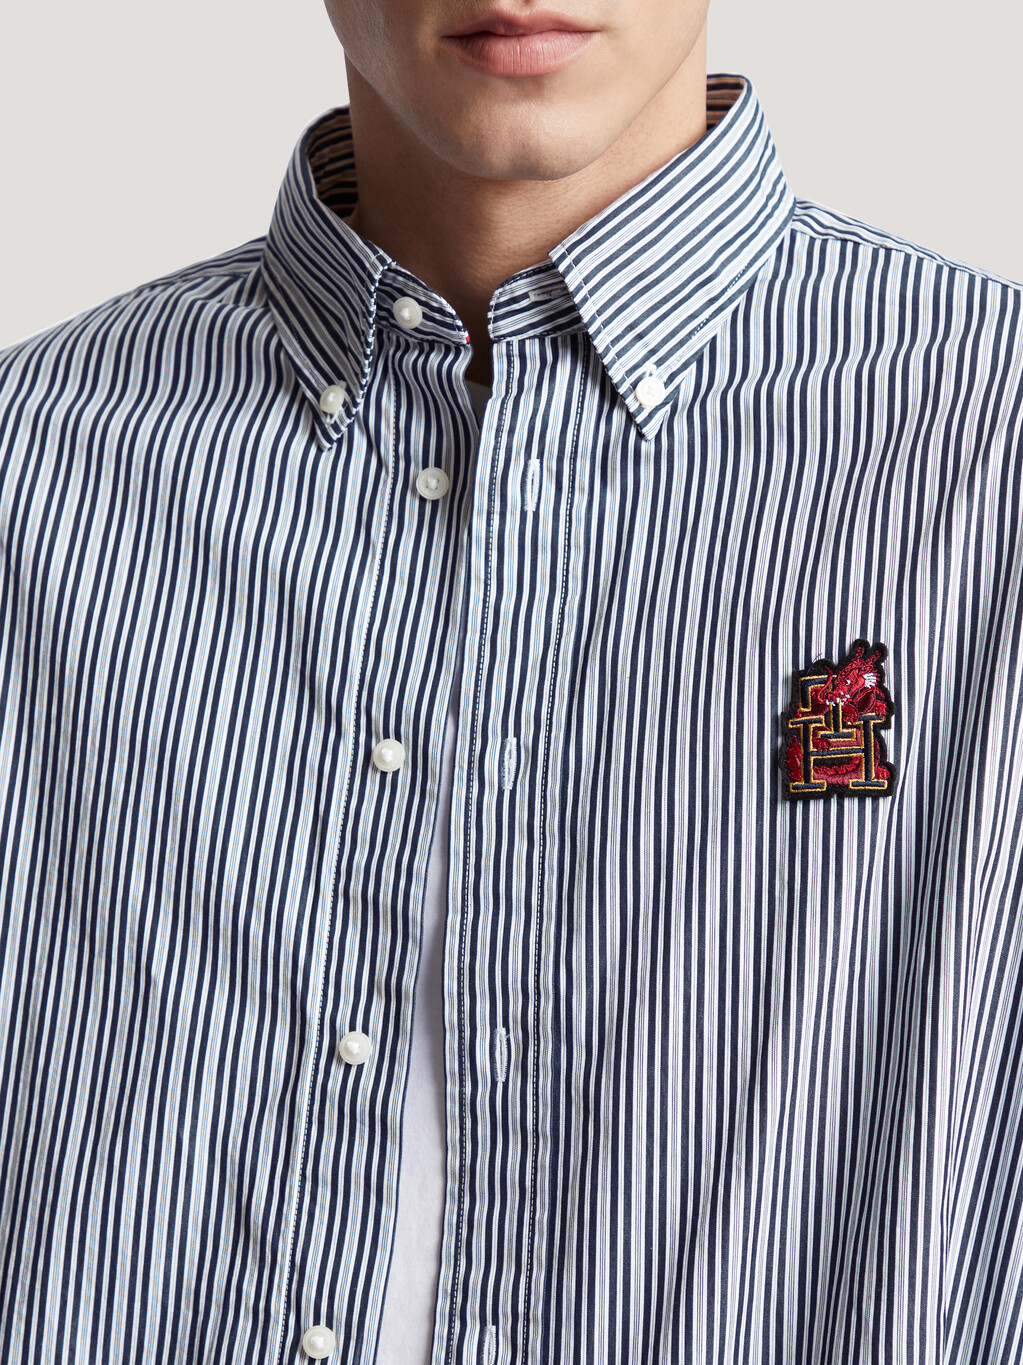 CNY Monogram Stripe Shirt, Desert Sky Stripes, hi-res